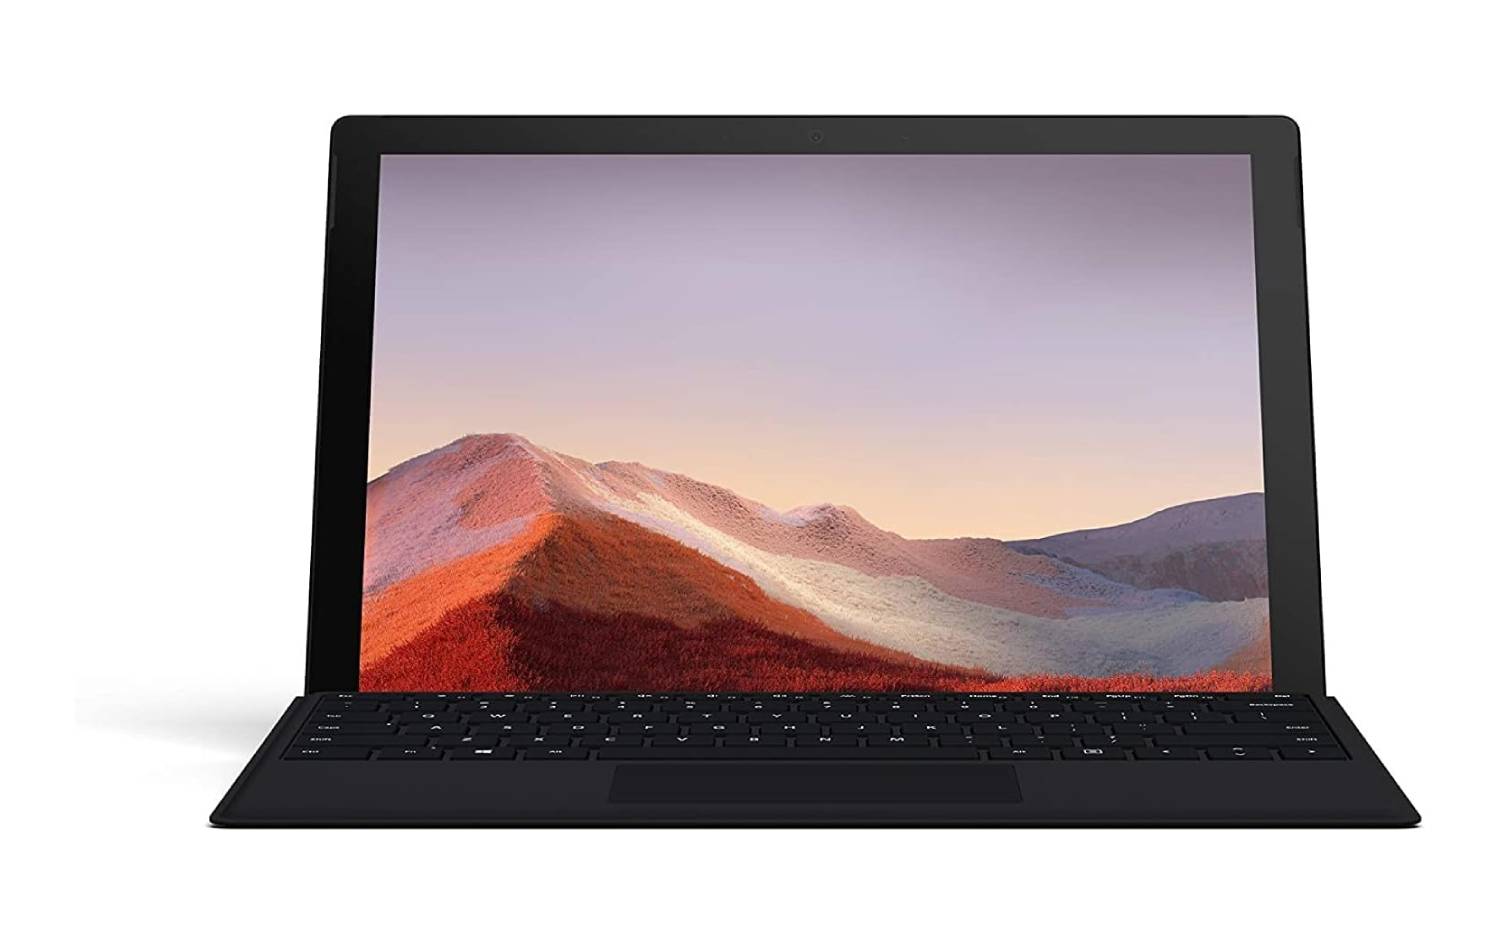 Microsoft Corporation Surface Pro 4 1742 Intel Core M3 6th Gen 4GB RAM 128GB SSD Microsoft Windows 10 Pro Touchscreen